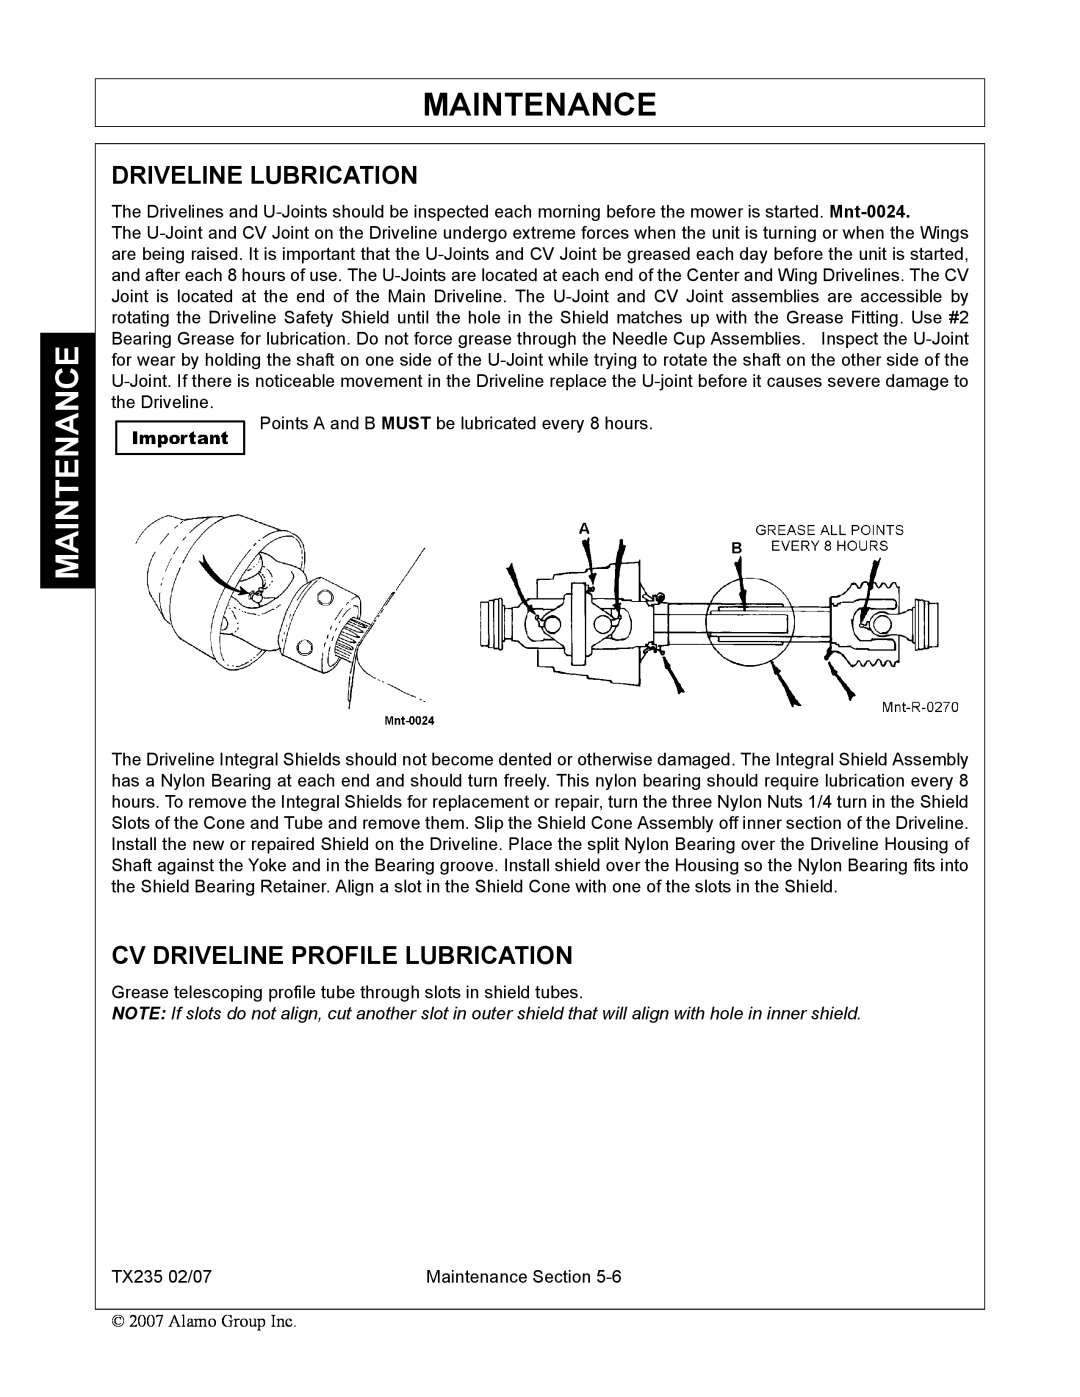 Alamo TX235 manual Driveline Lubrication, Cv Driveline Profile Lubrication, Maintenance 